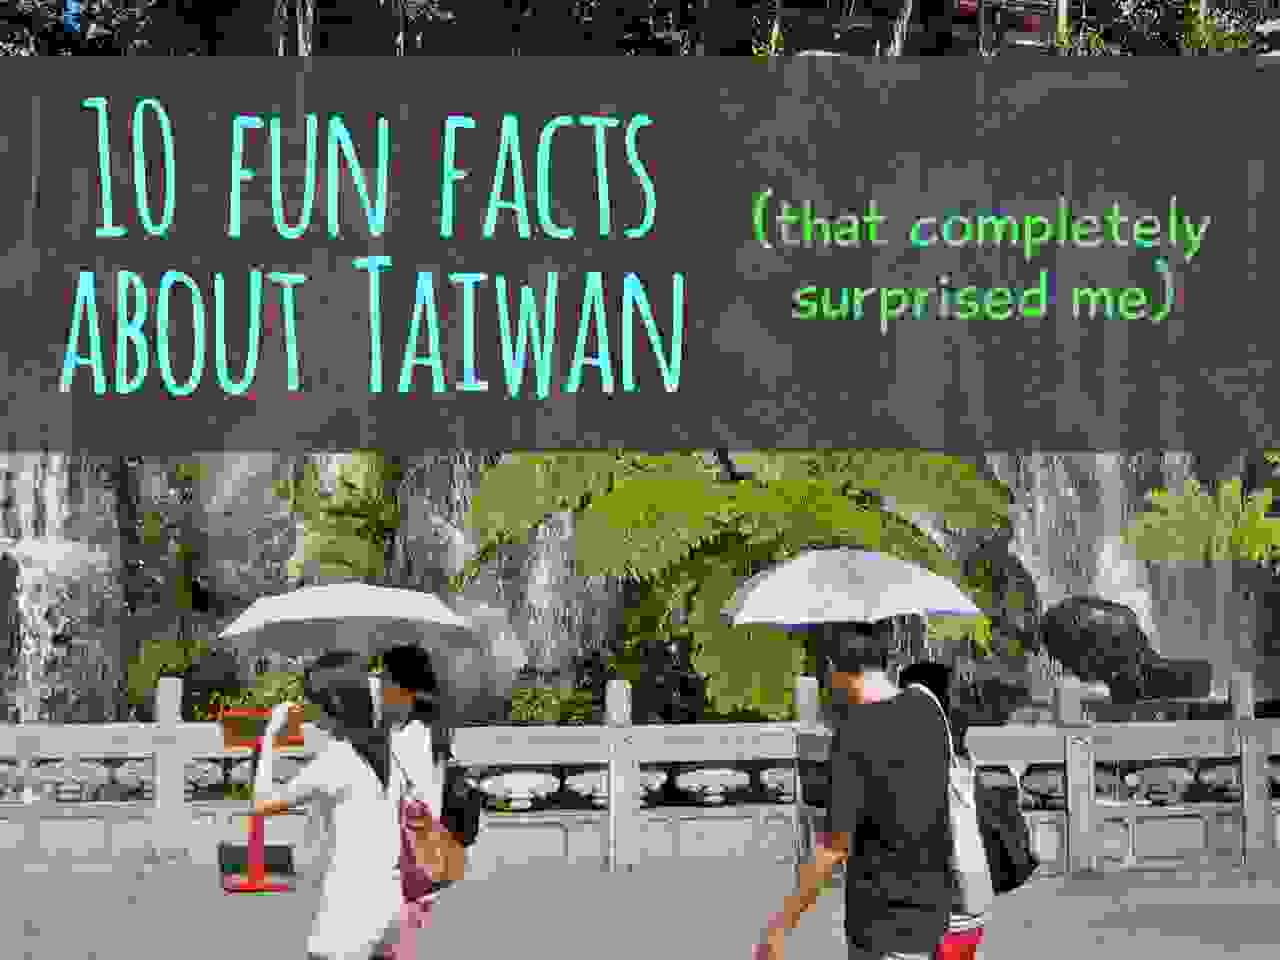 10 Fun Facts about Taiwan